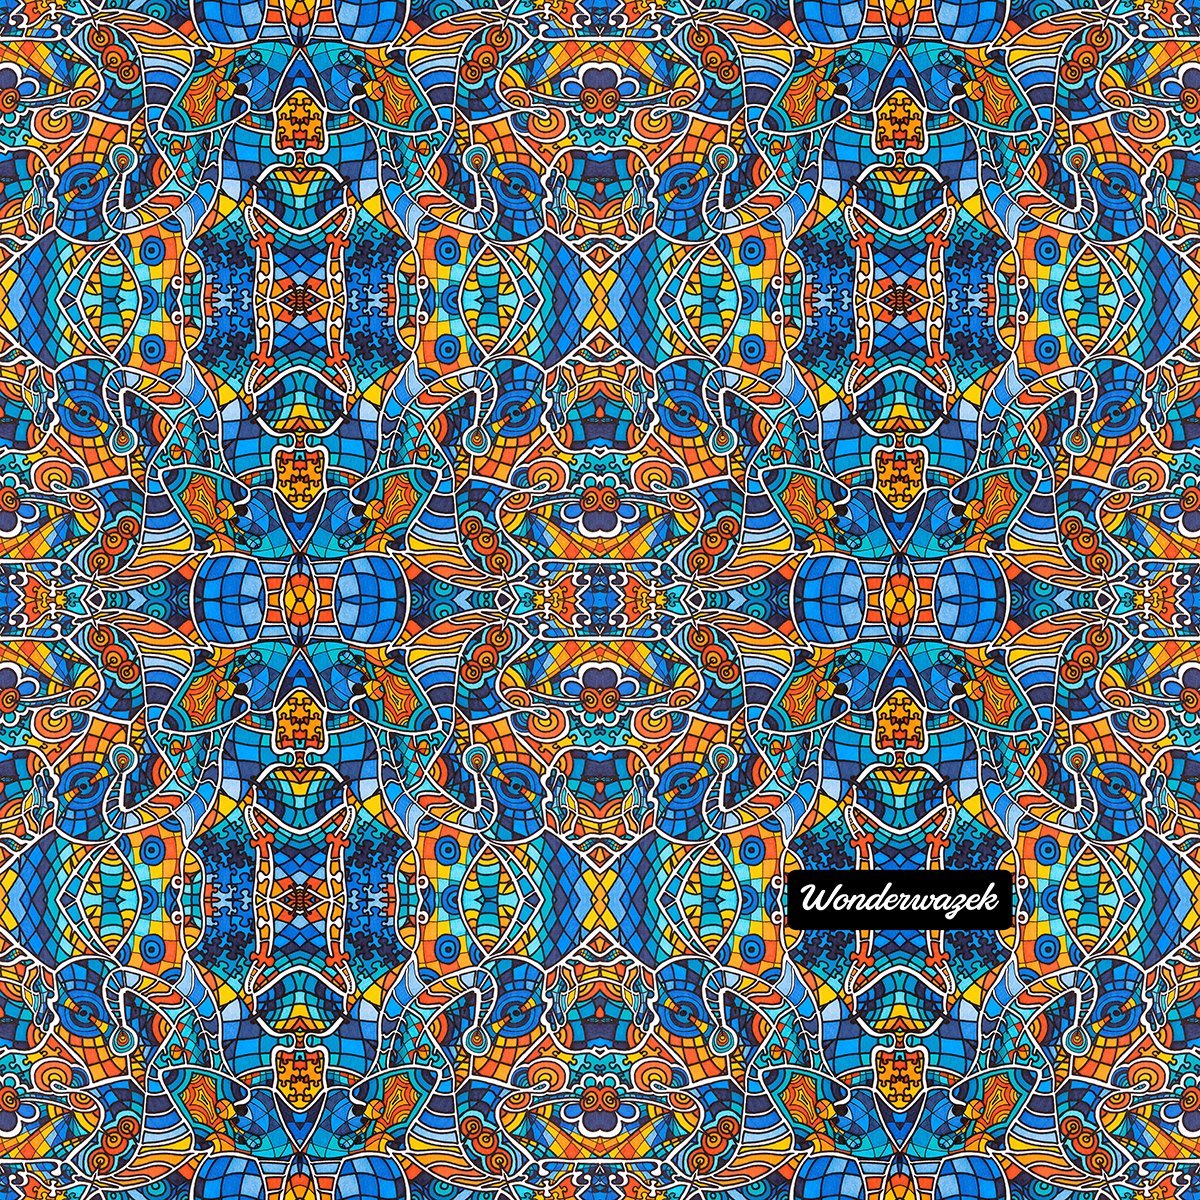 Kissen • Blankas Blumen – Variation 3, blau, gelb, orange - Wonderwazek